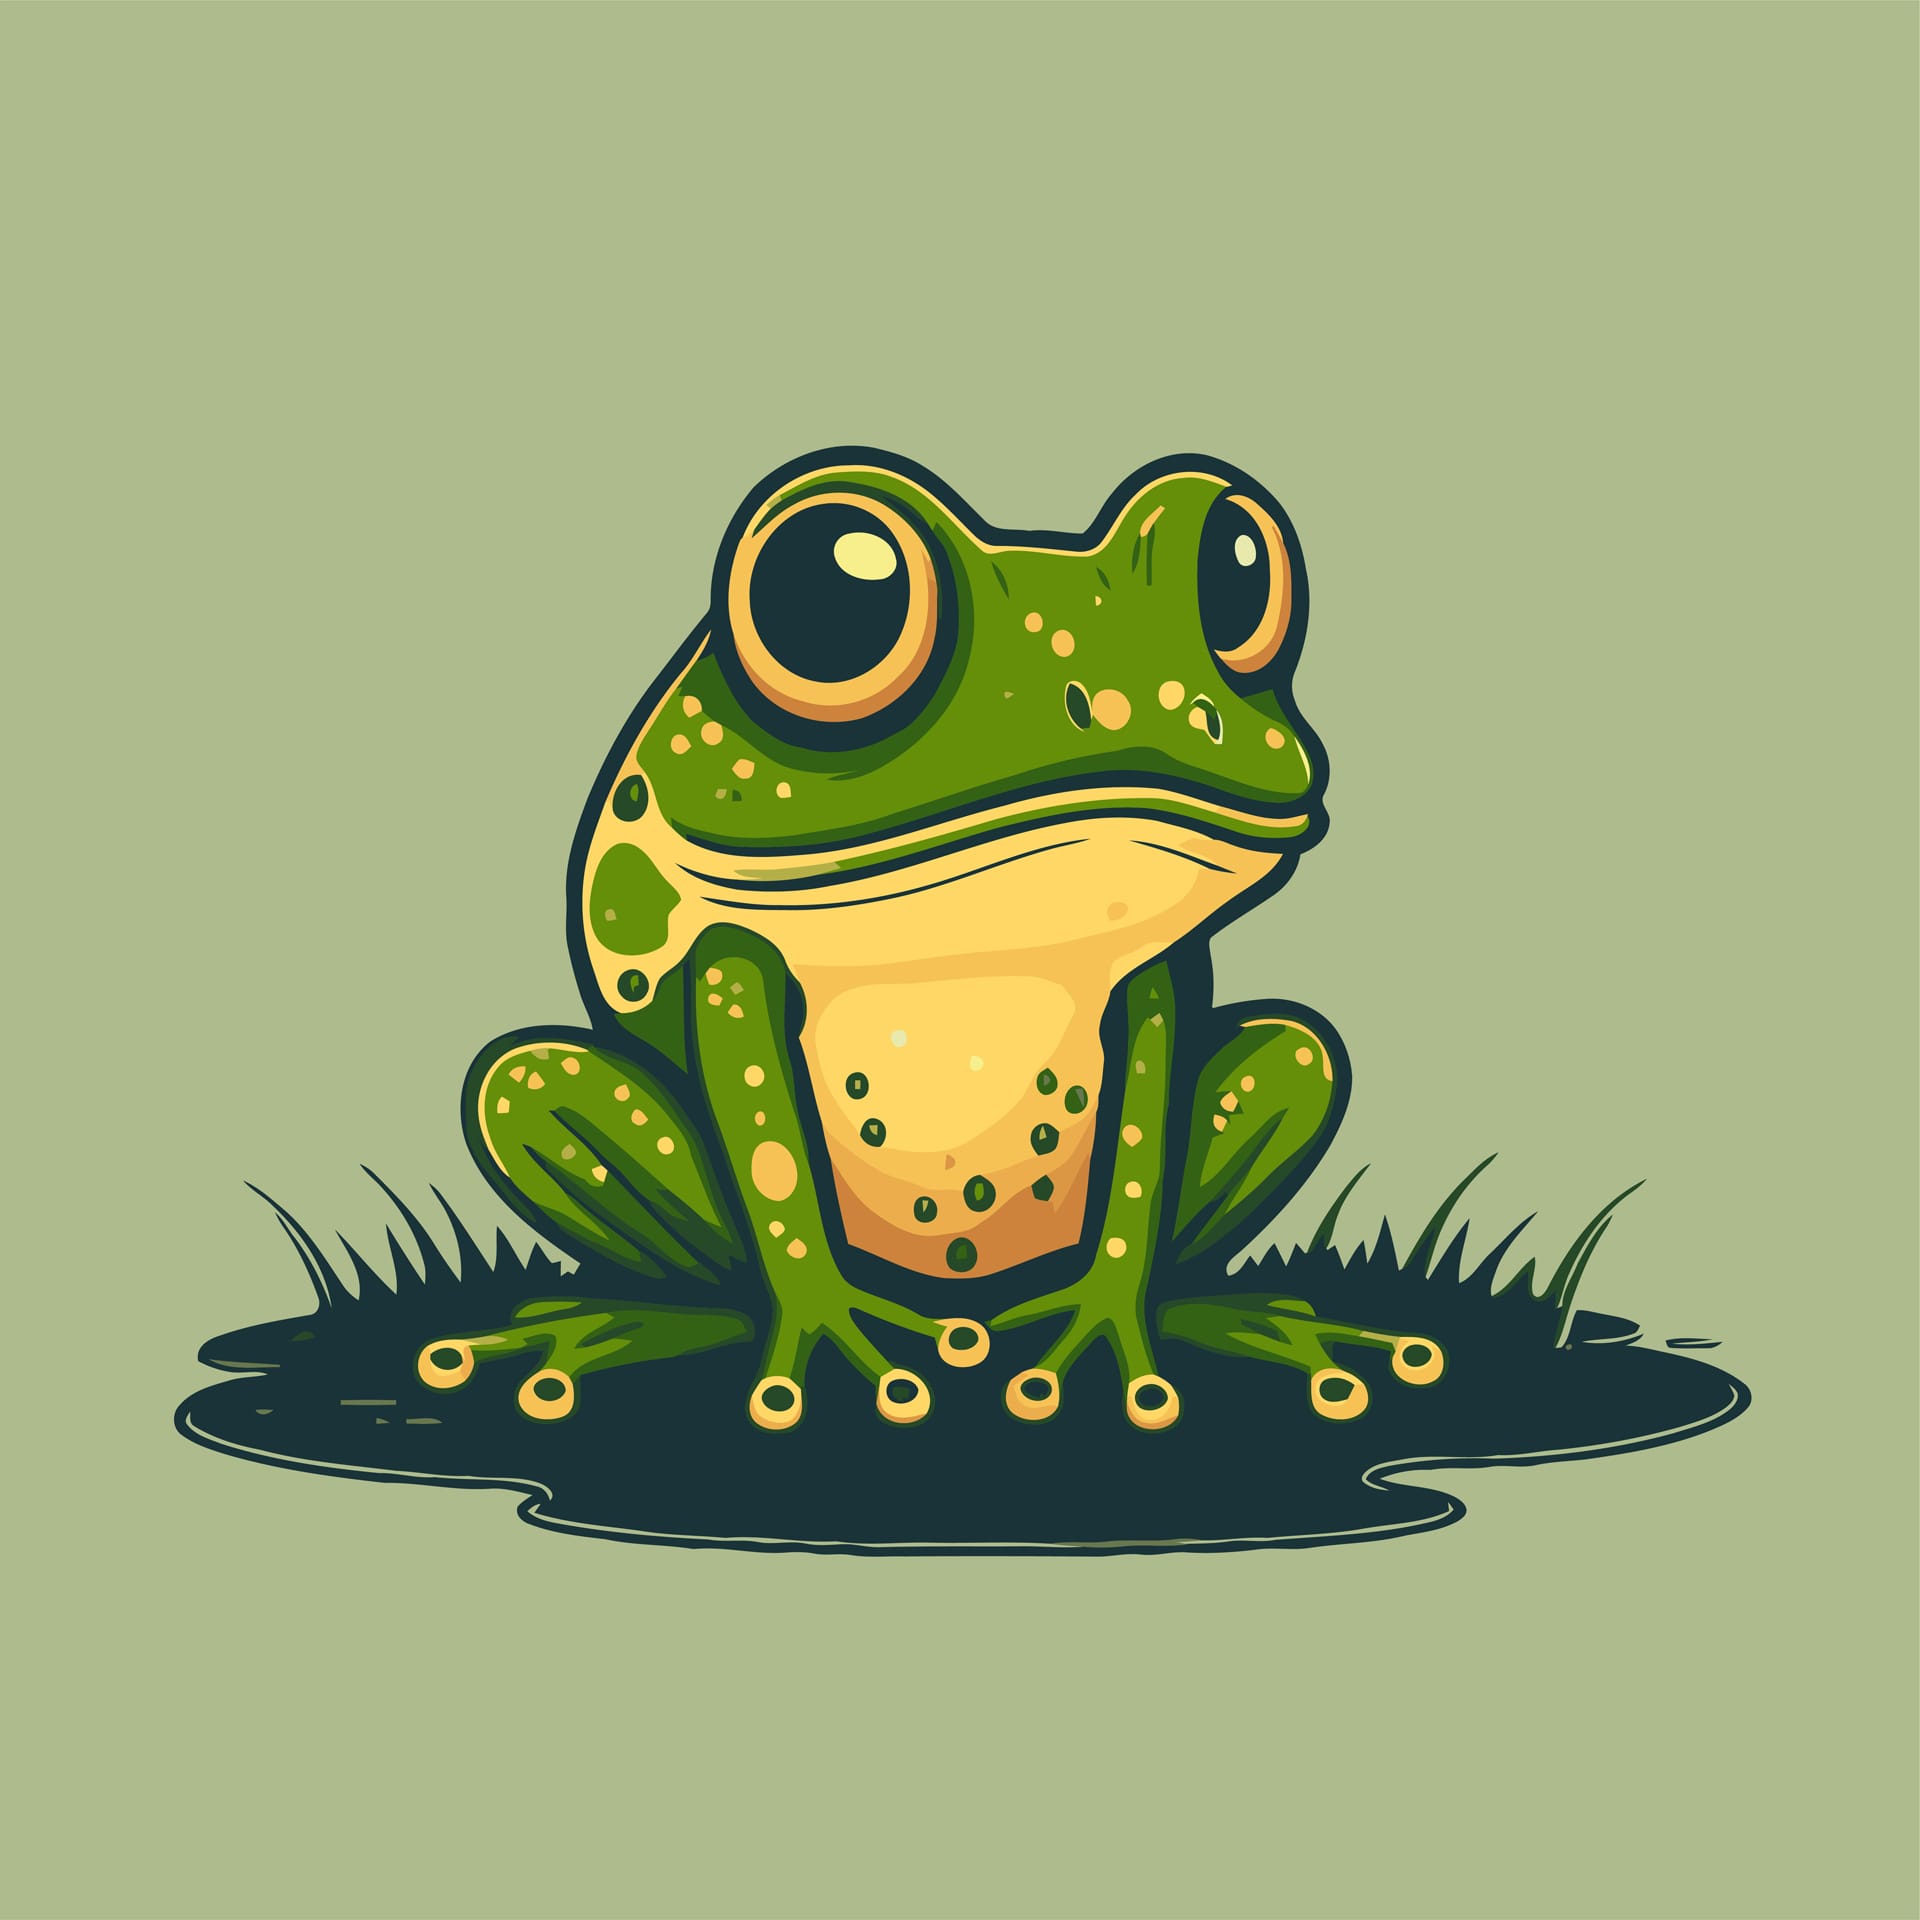 Green frog character logo mascot design cartoon business branding image